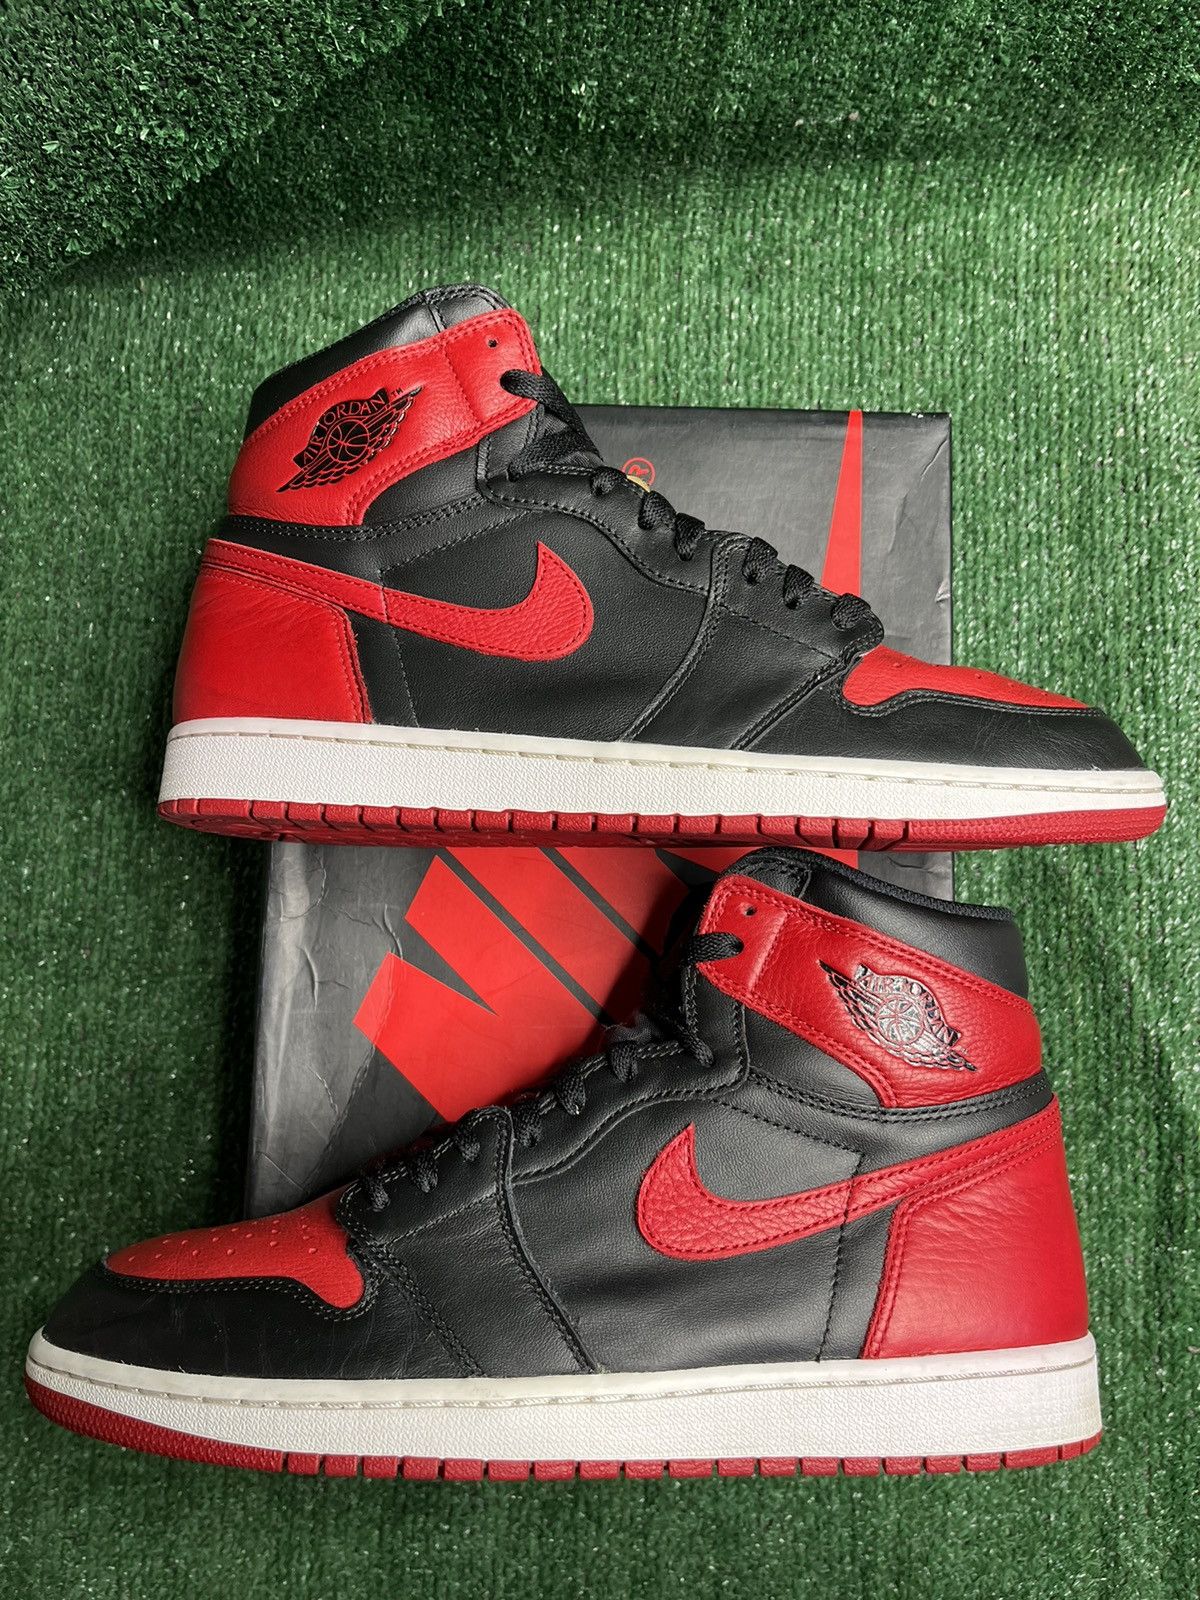 Pre-owned Jordan Brand Air Jordan Banned 1 Shoes In Black